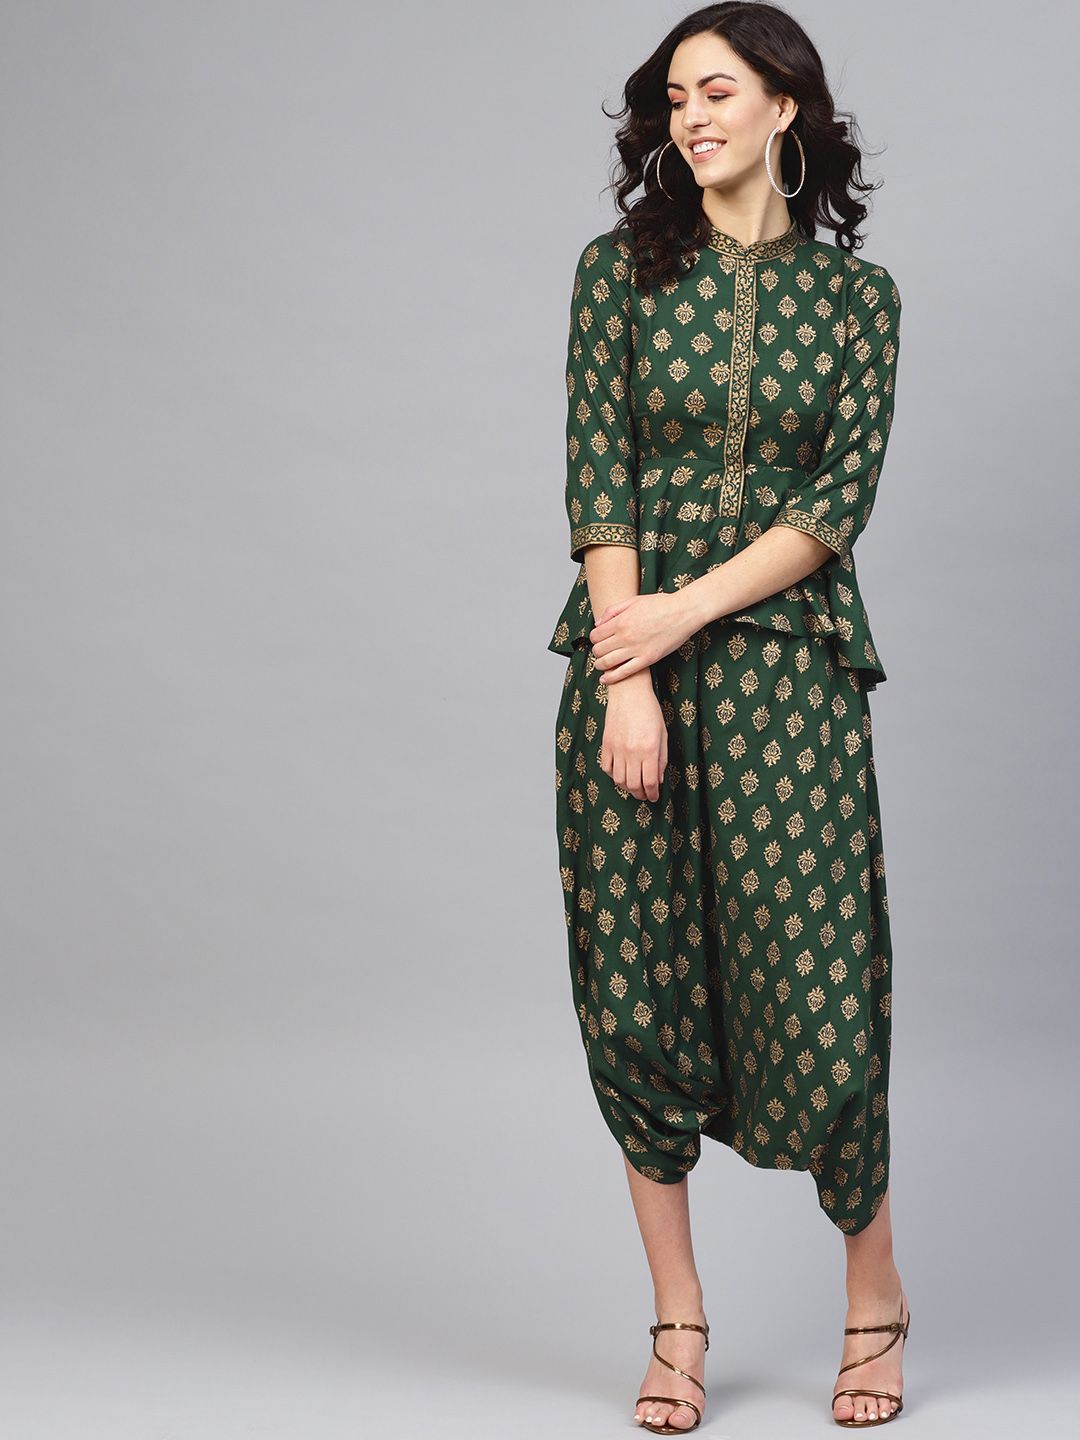 MABISH by Sonal Jain Women Green & Golden Dhoti Style Printed Basic Jumpsuit Price in India